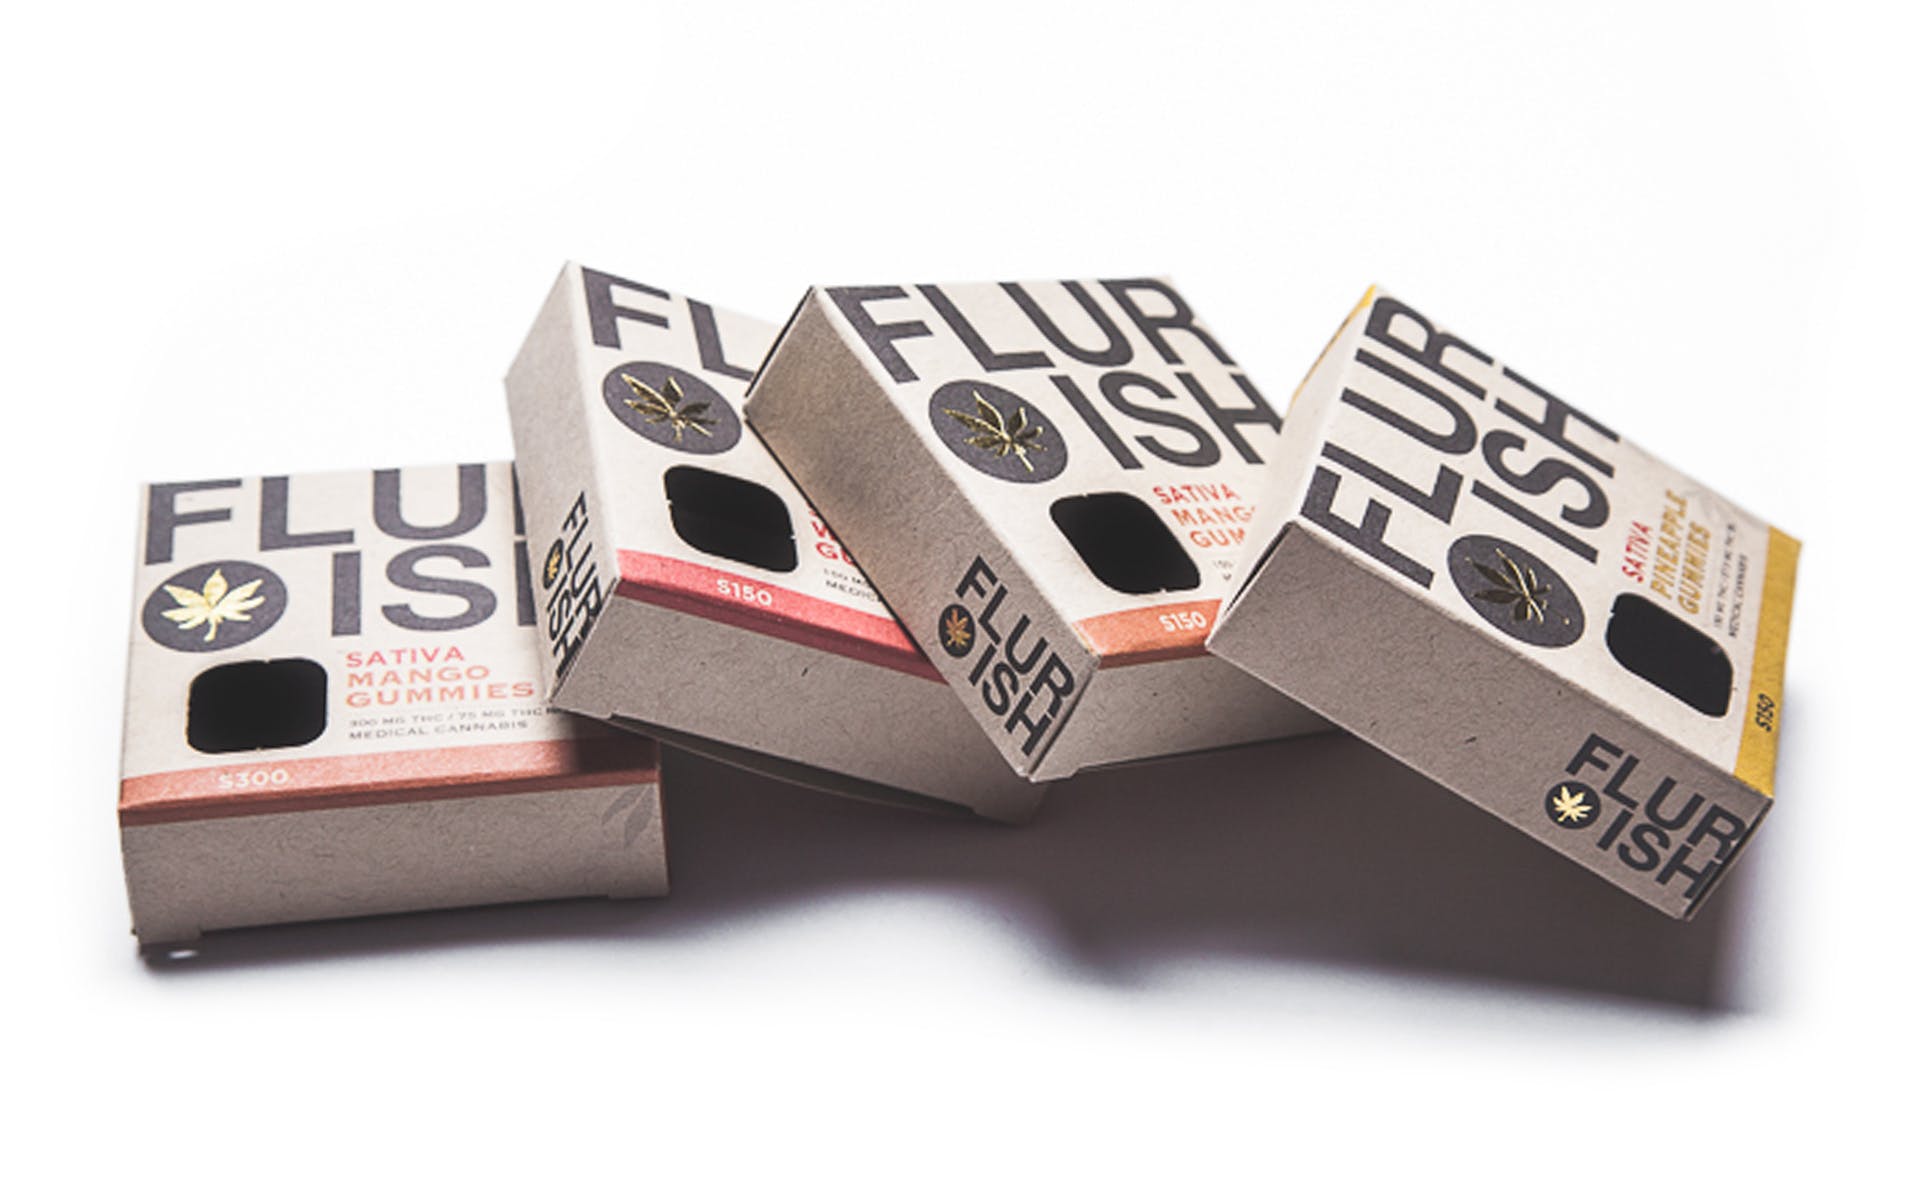 edible-flurish-150mg-gummies2for25